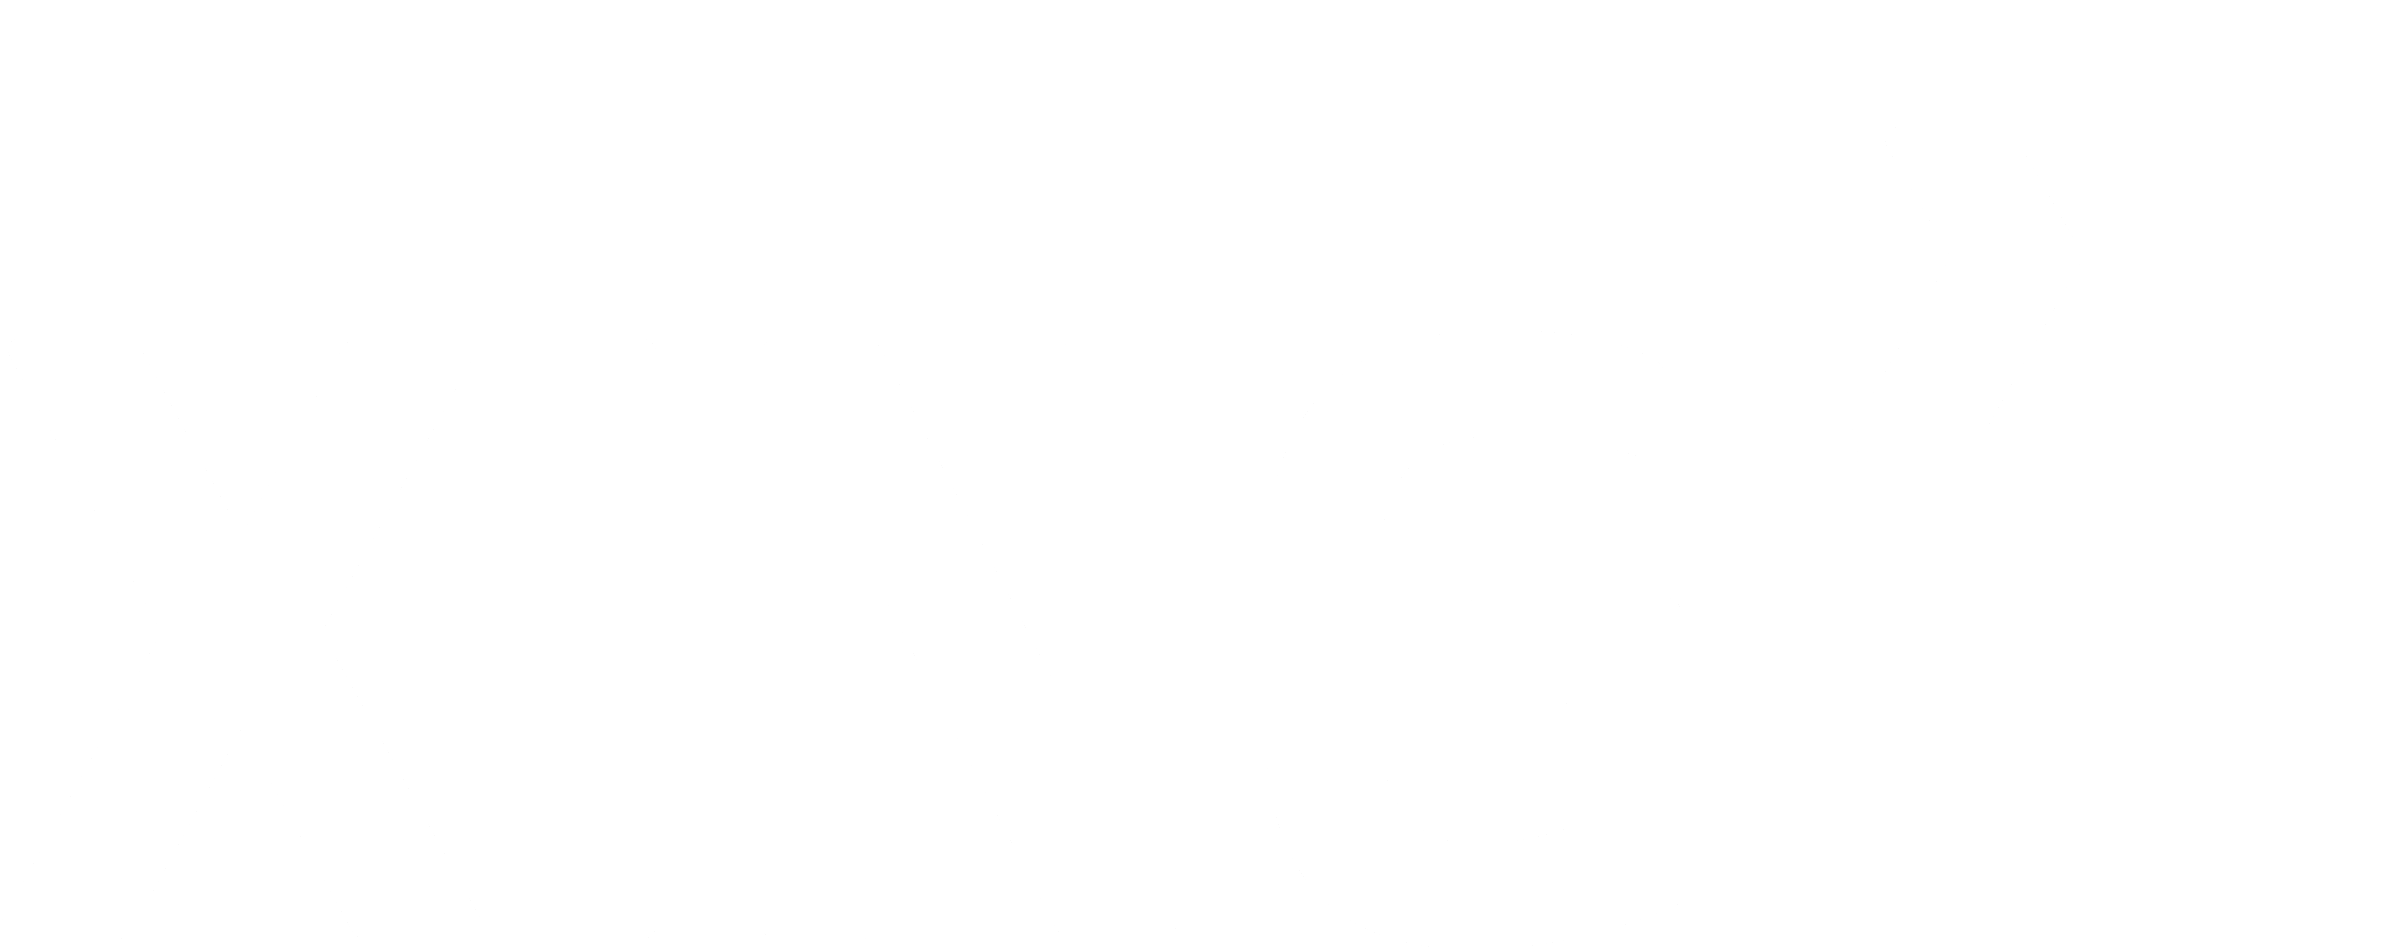 Xing Logo - Xing Logo PNG Transparent & SVG Vector - Freebie Supply